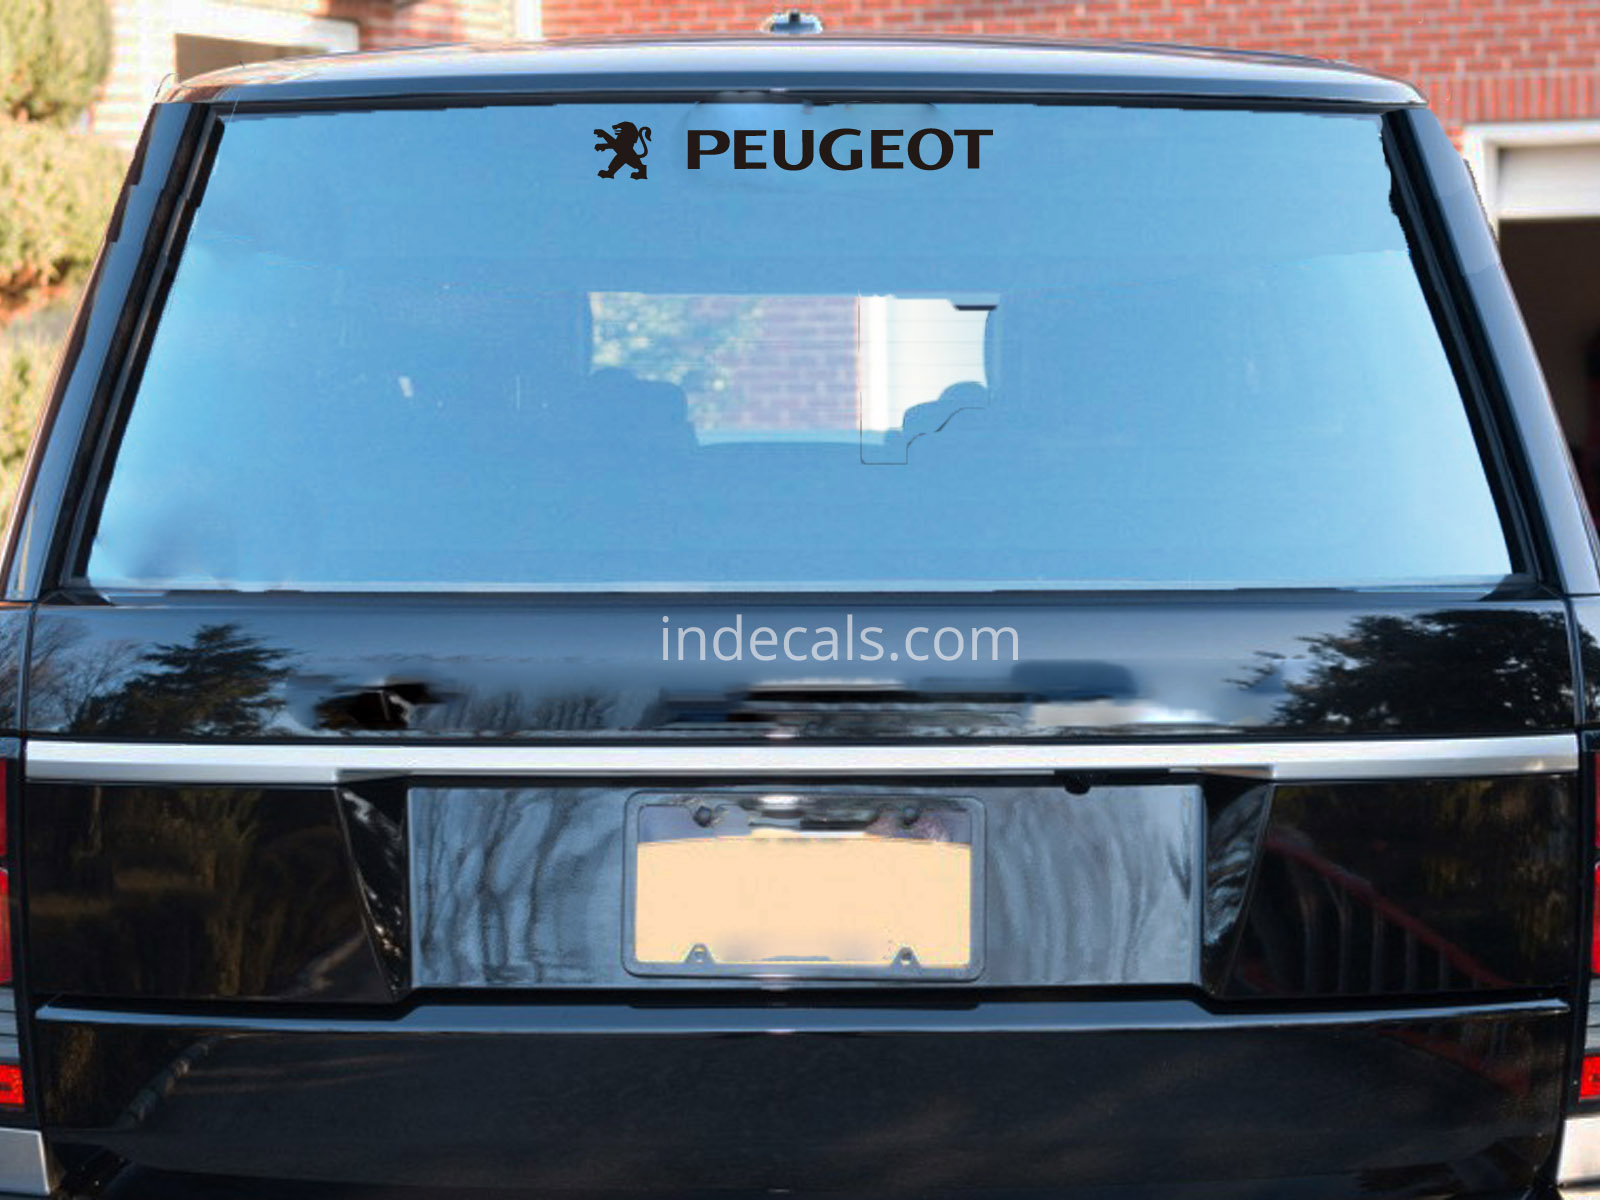 1 x Peugeot Sticker for Windshield or Back Window - Black